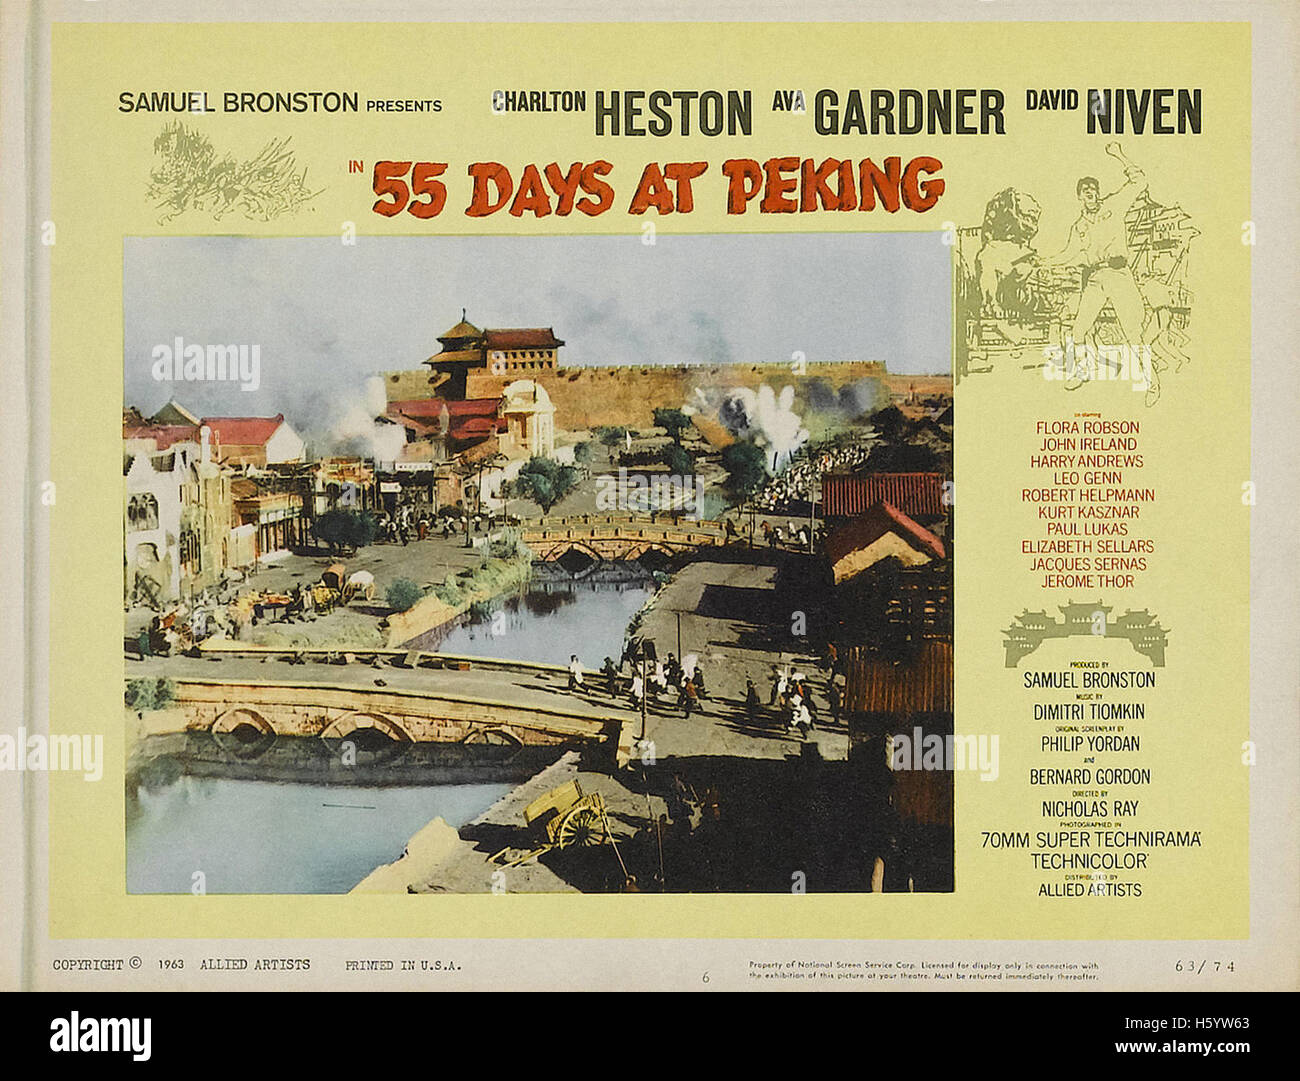 55 Days at Peking - Movie Poster Stock Photo